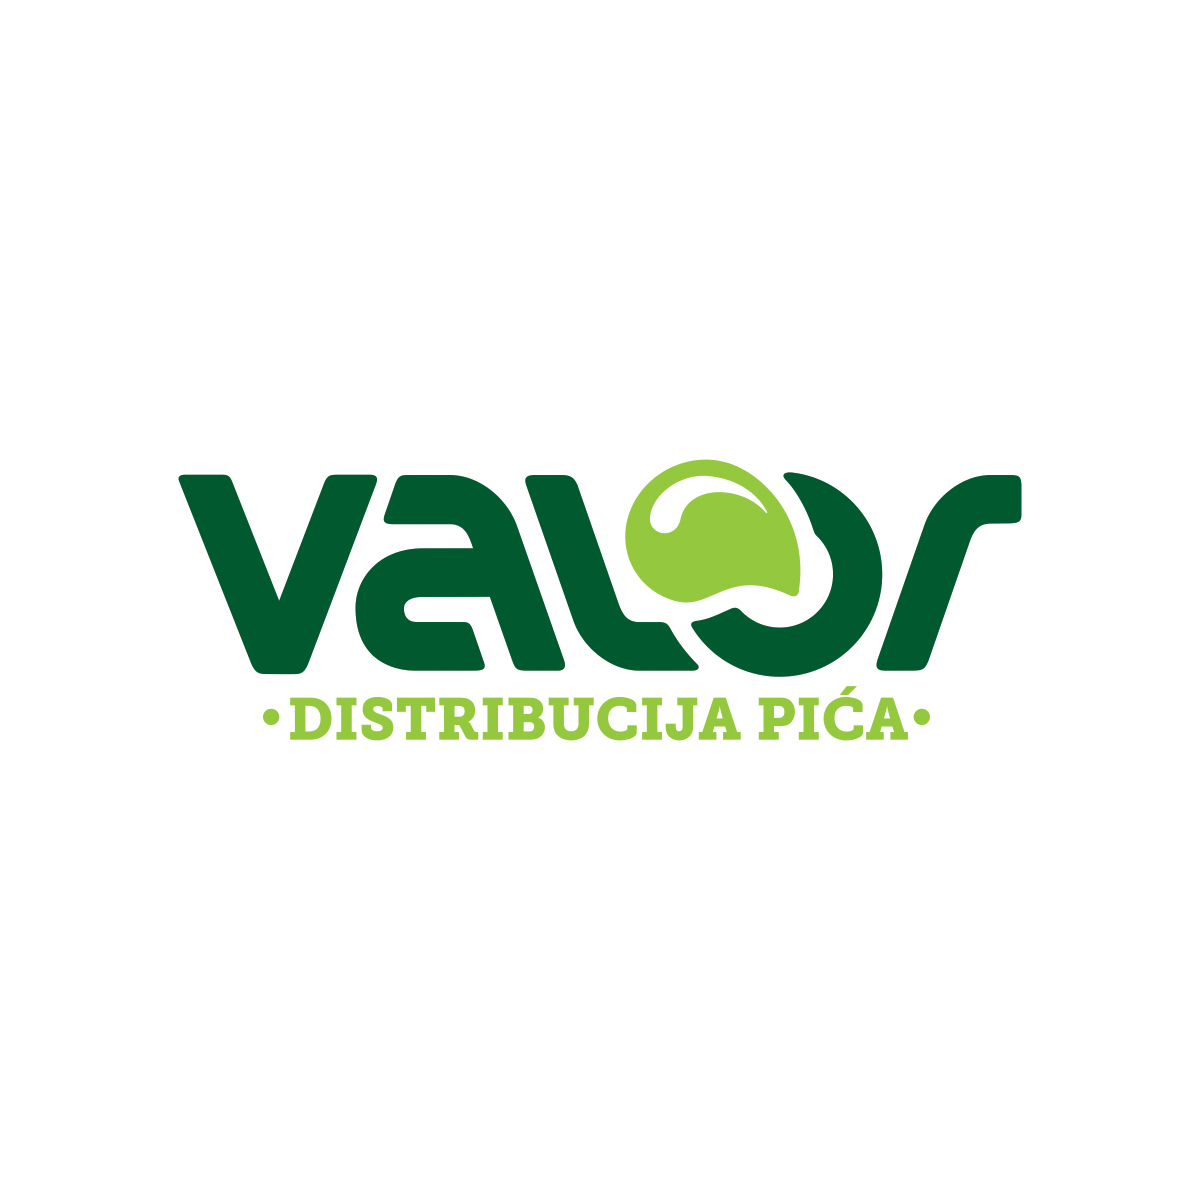 Valor logo design